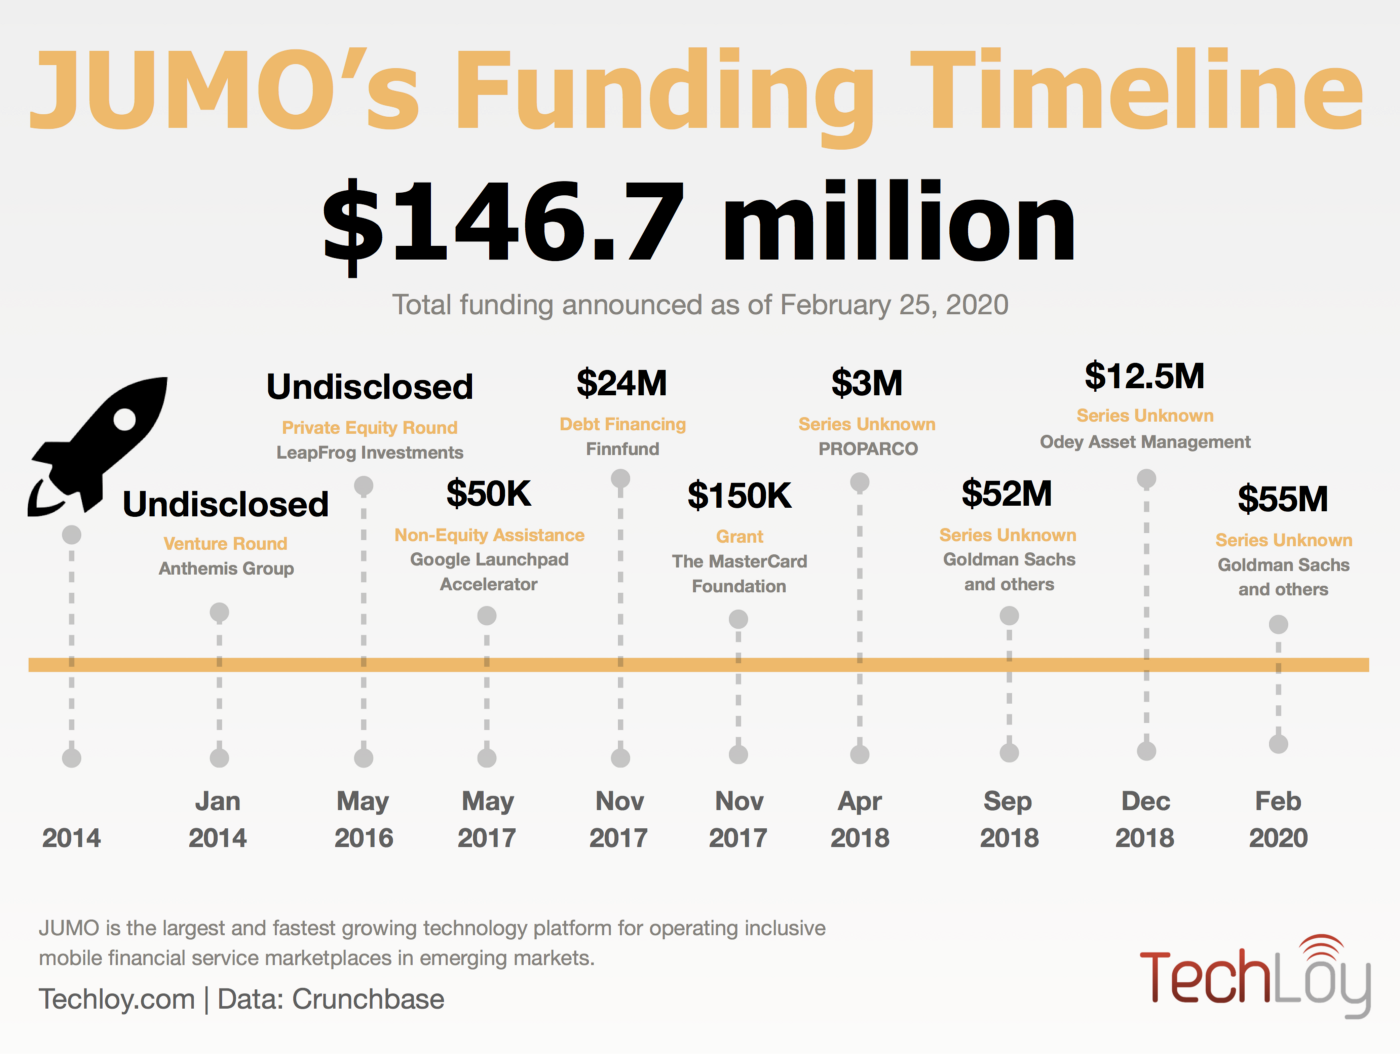 JUMO has raised $146.7 million in funding to date